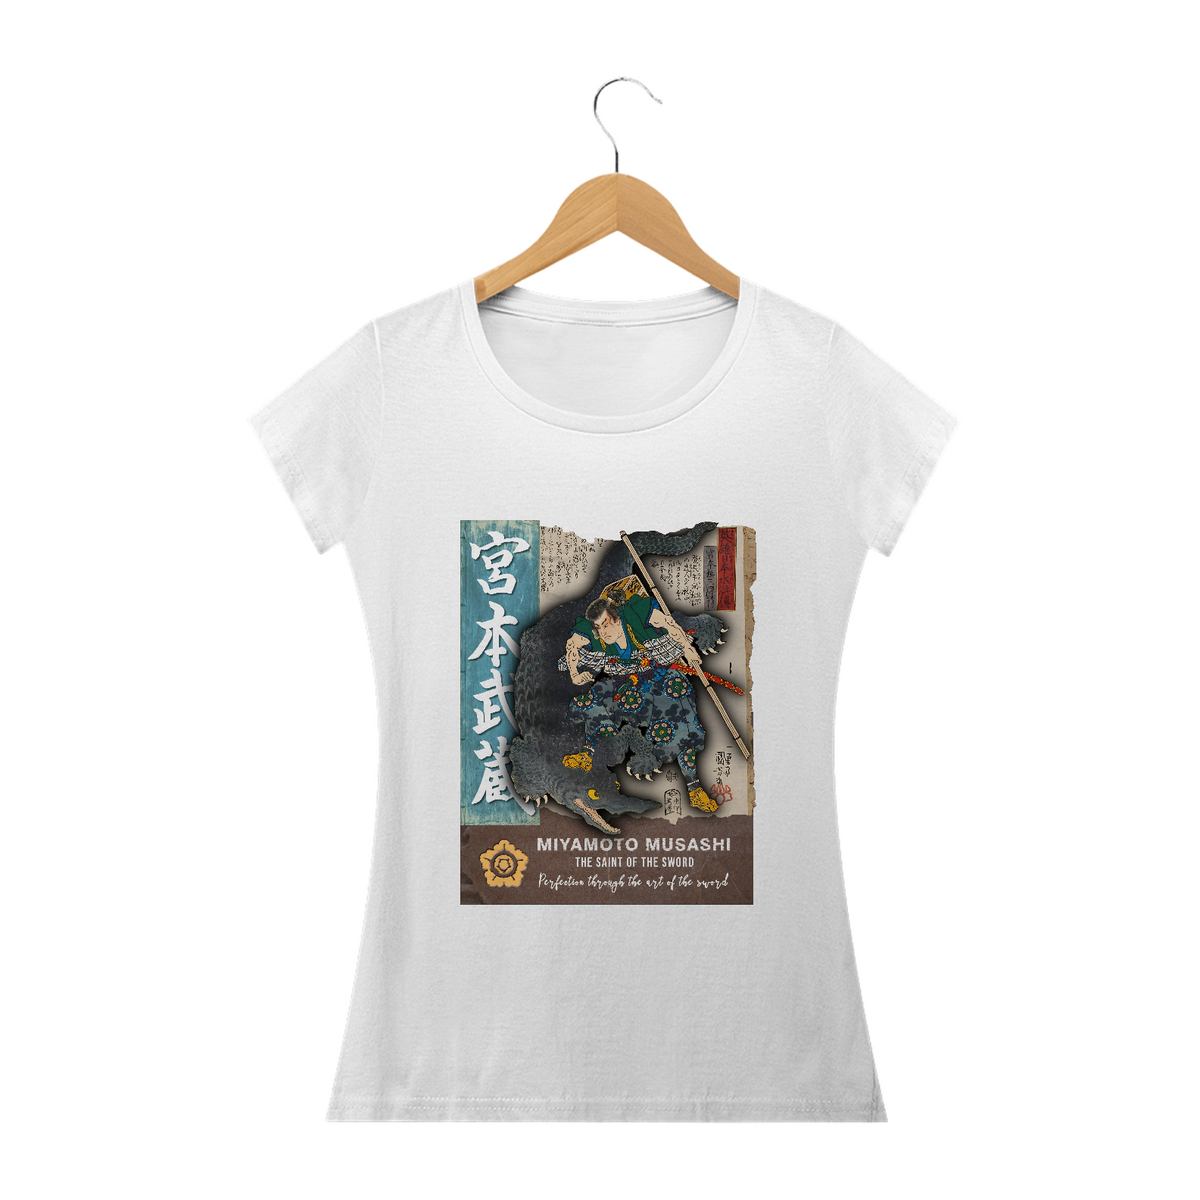 Nome do produto: Camiseta Baby Long: “Miyamoto Musashi”